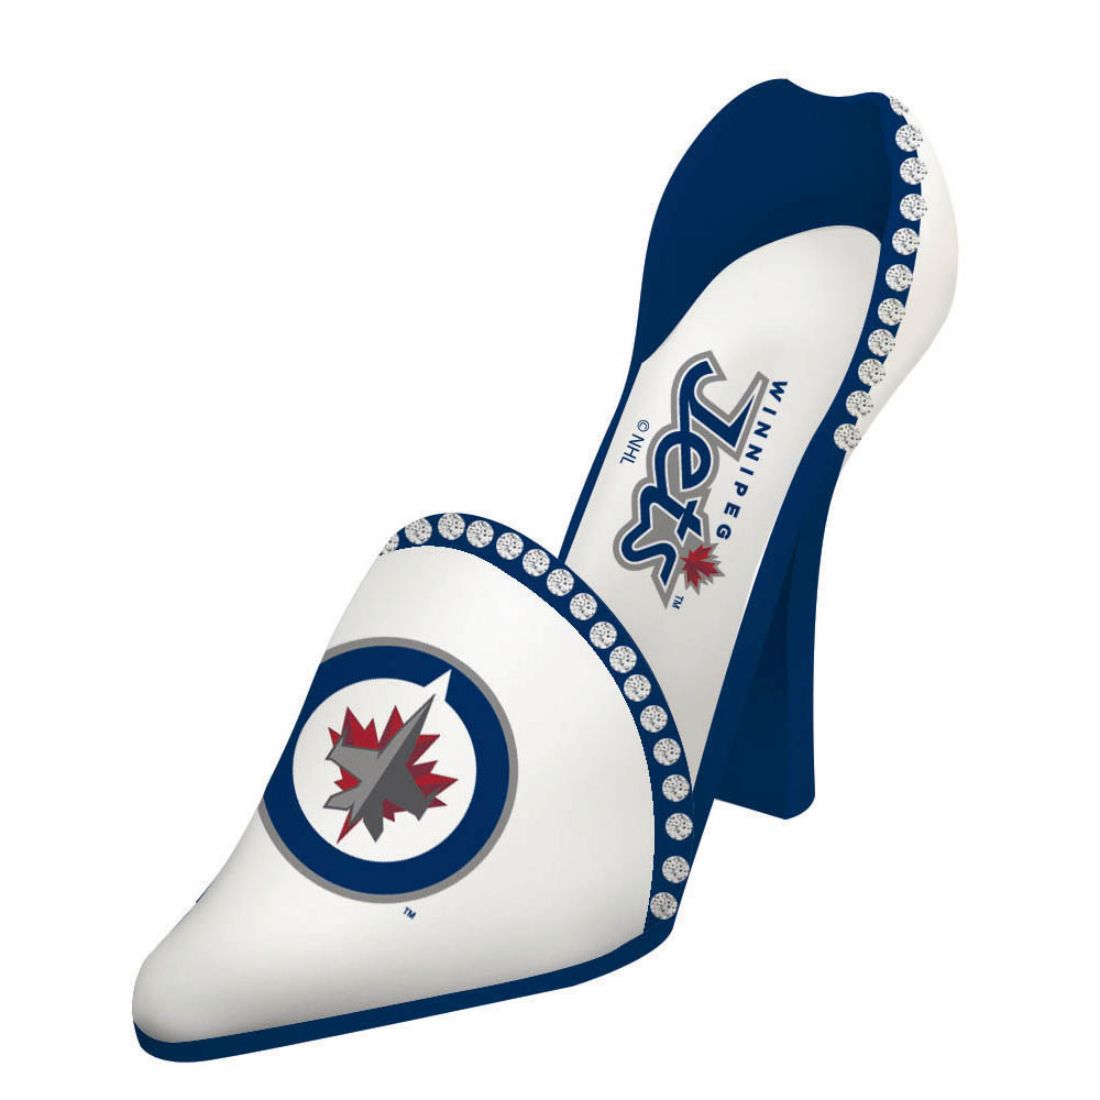 Winnipeg Jets Decorative High Heel Shoe Wine Bottle Holder